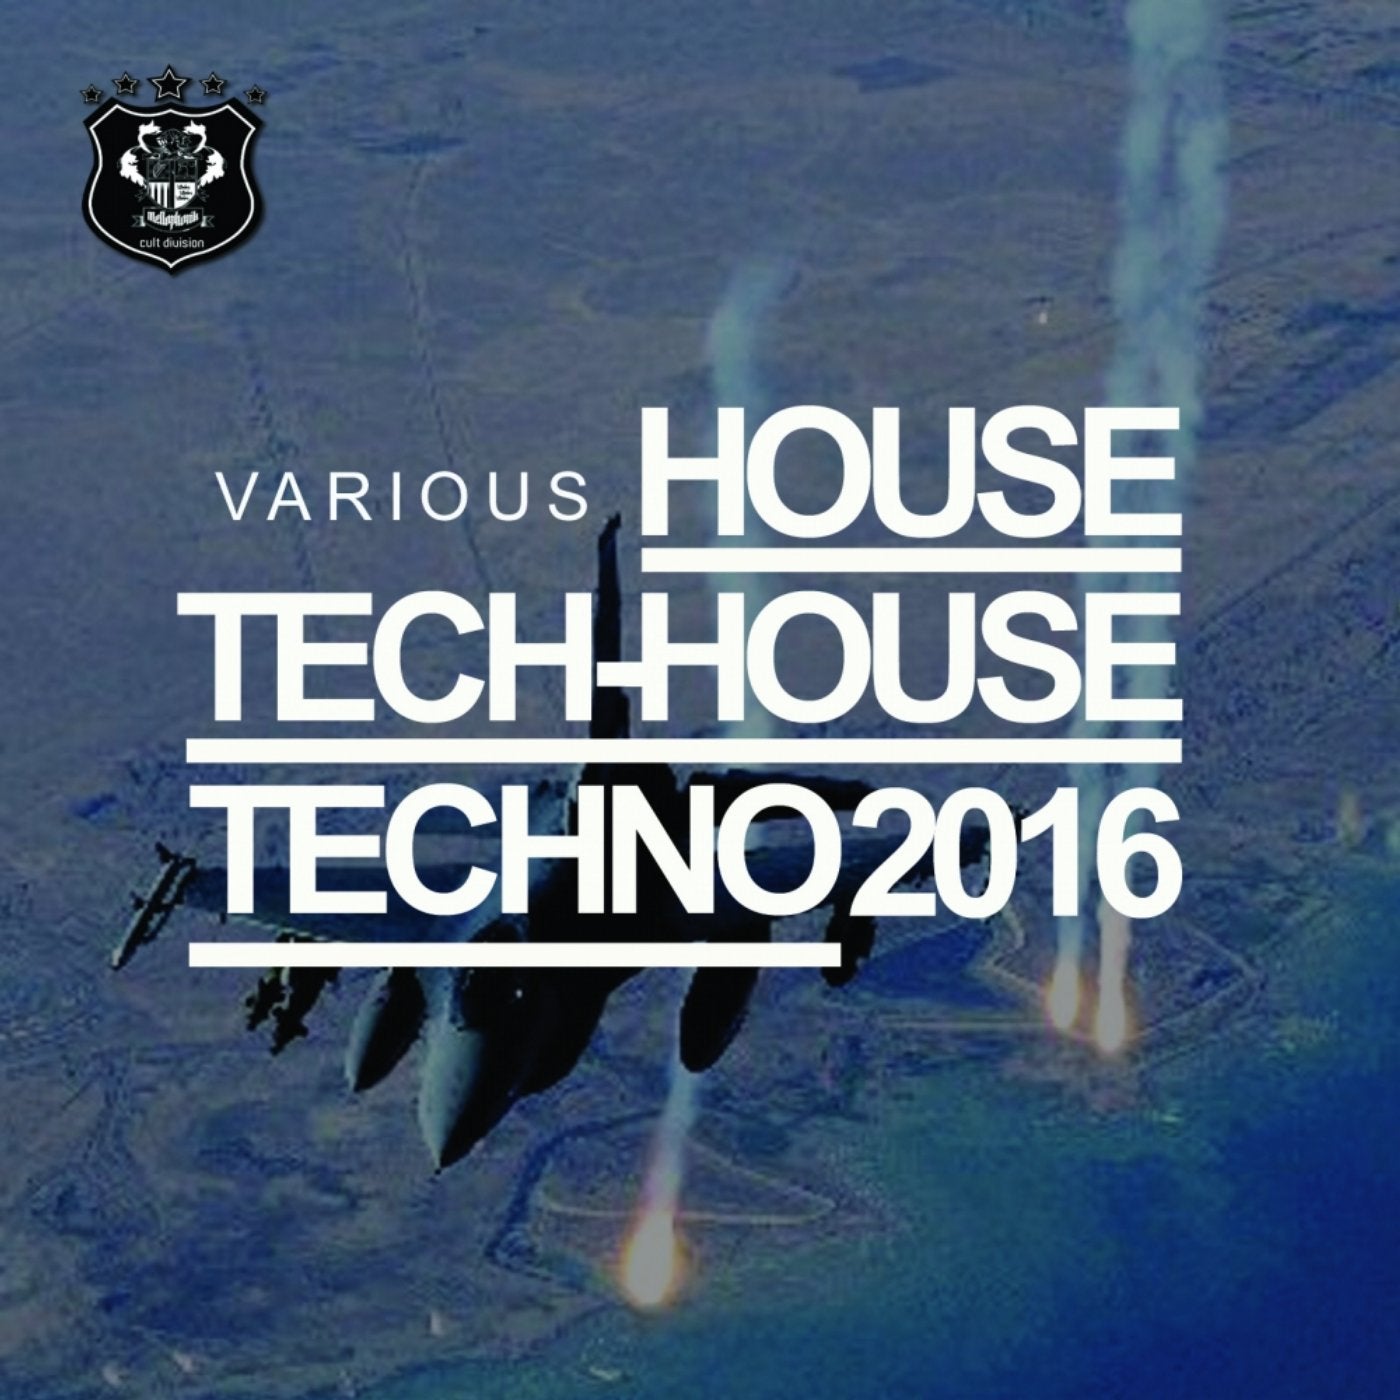 House, Tech House, Techno